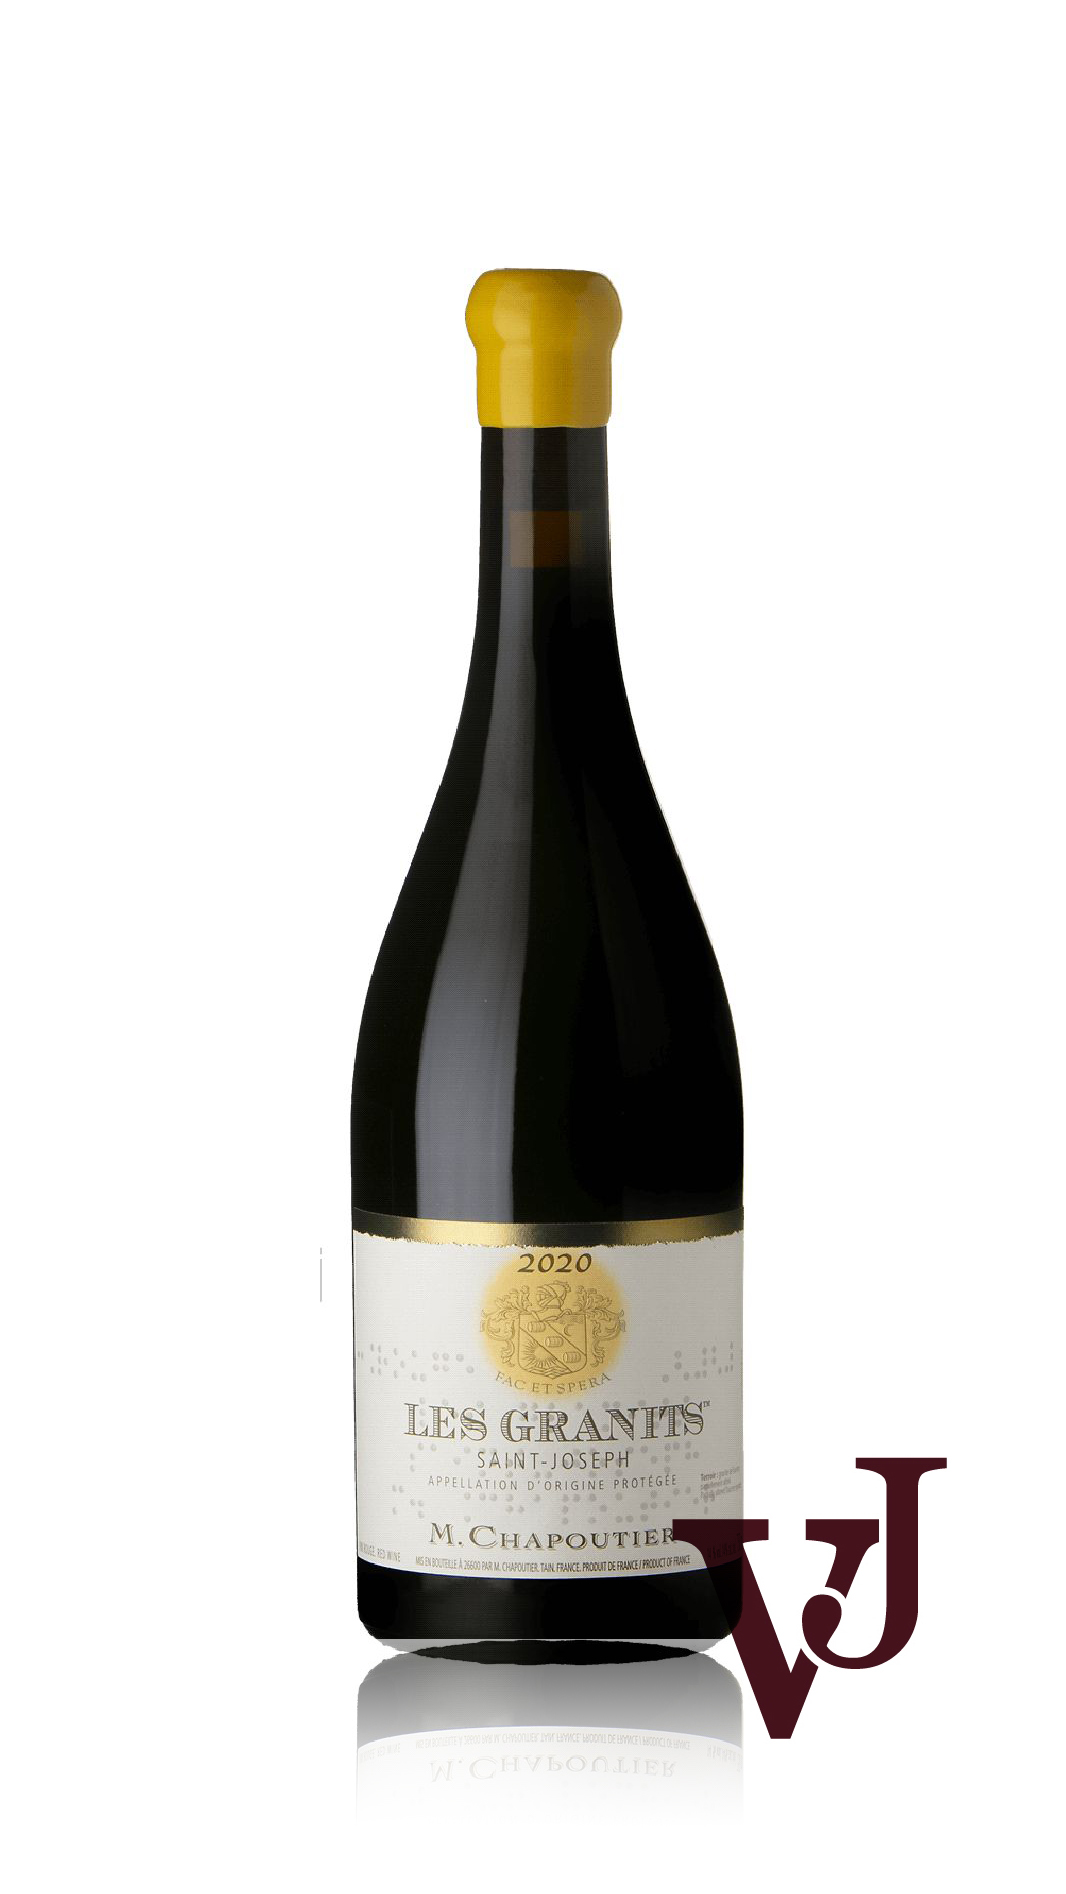 Rött vin - Chapoutier Les Granits Rouge 2020 artikel nummer 9452701 från producenten M.Chapoutier från Frankrike